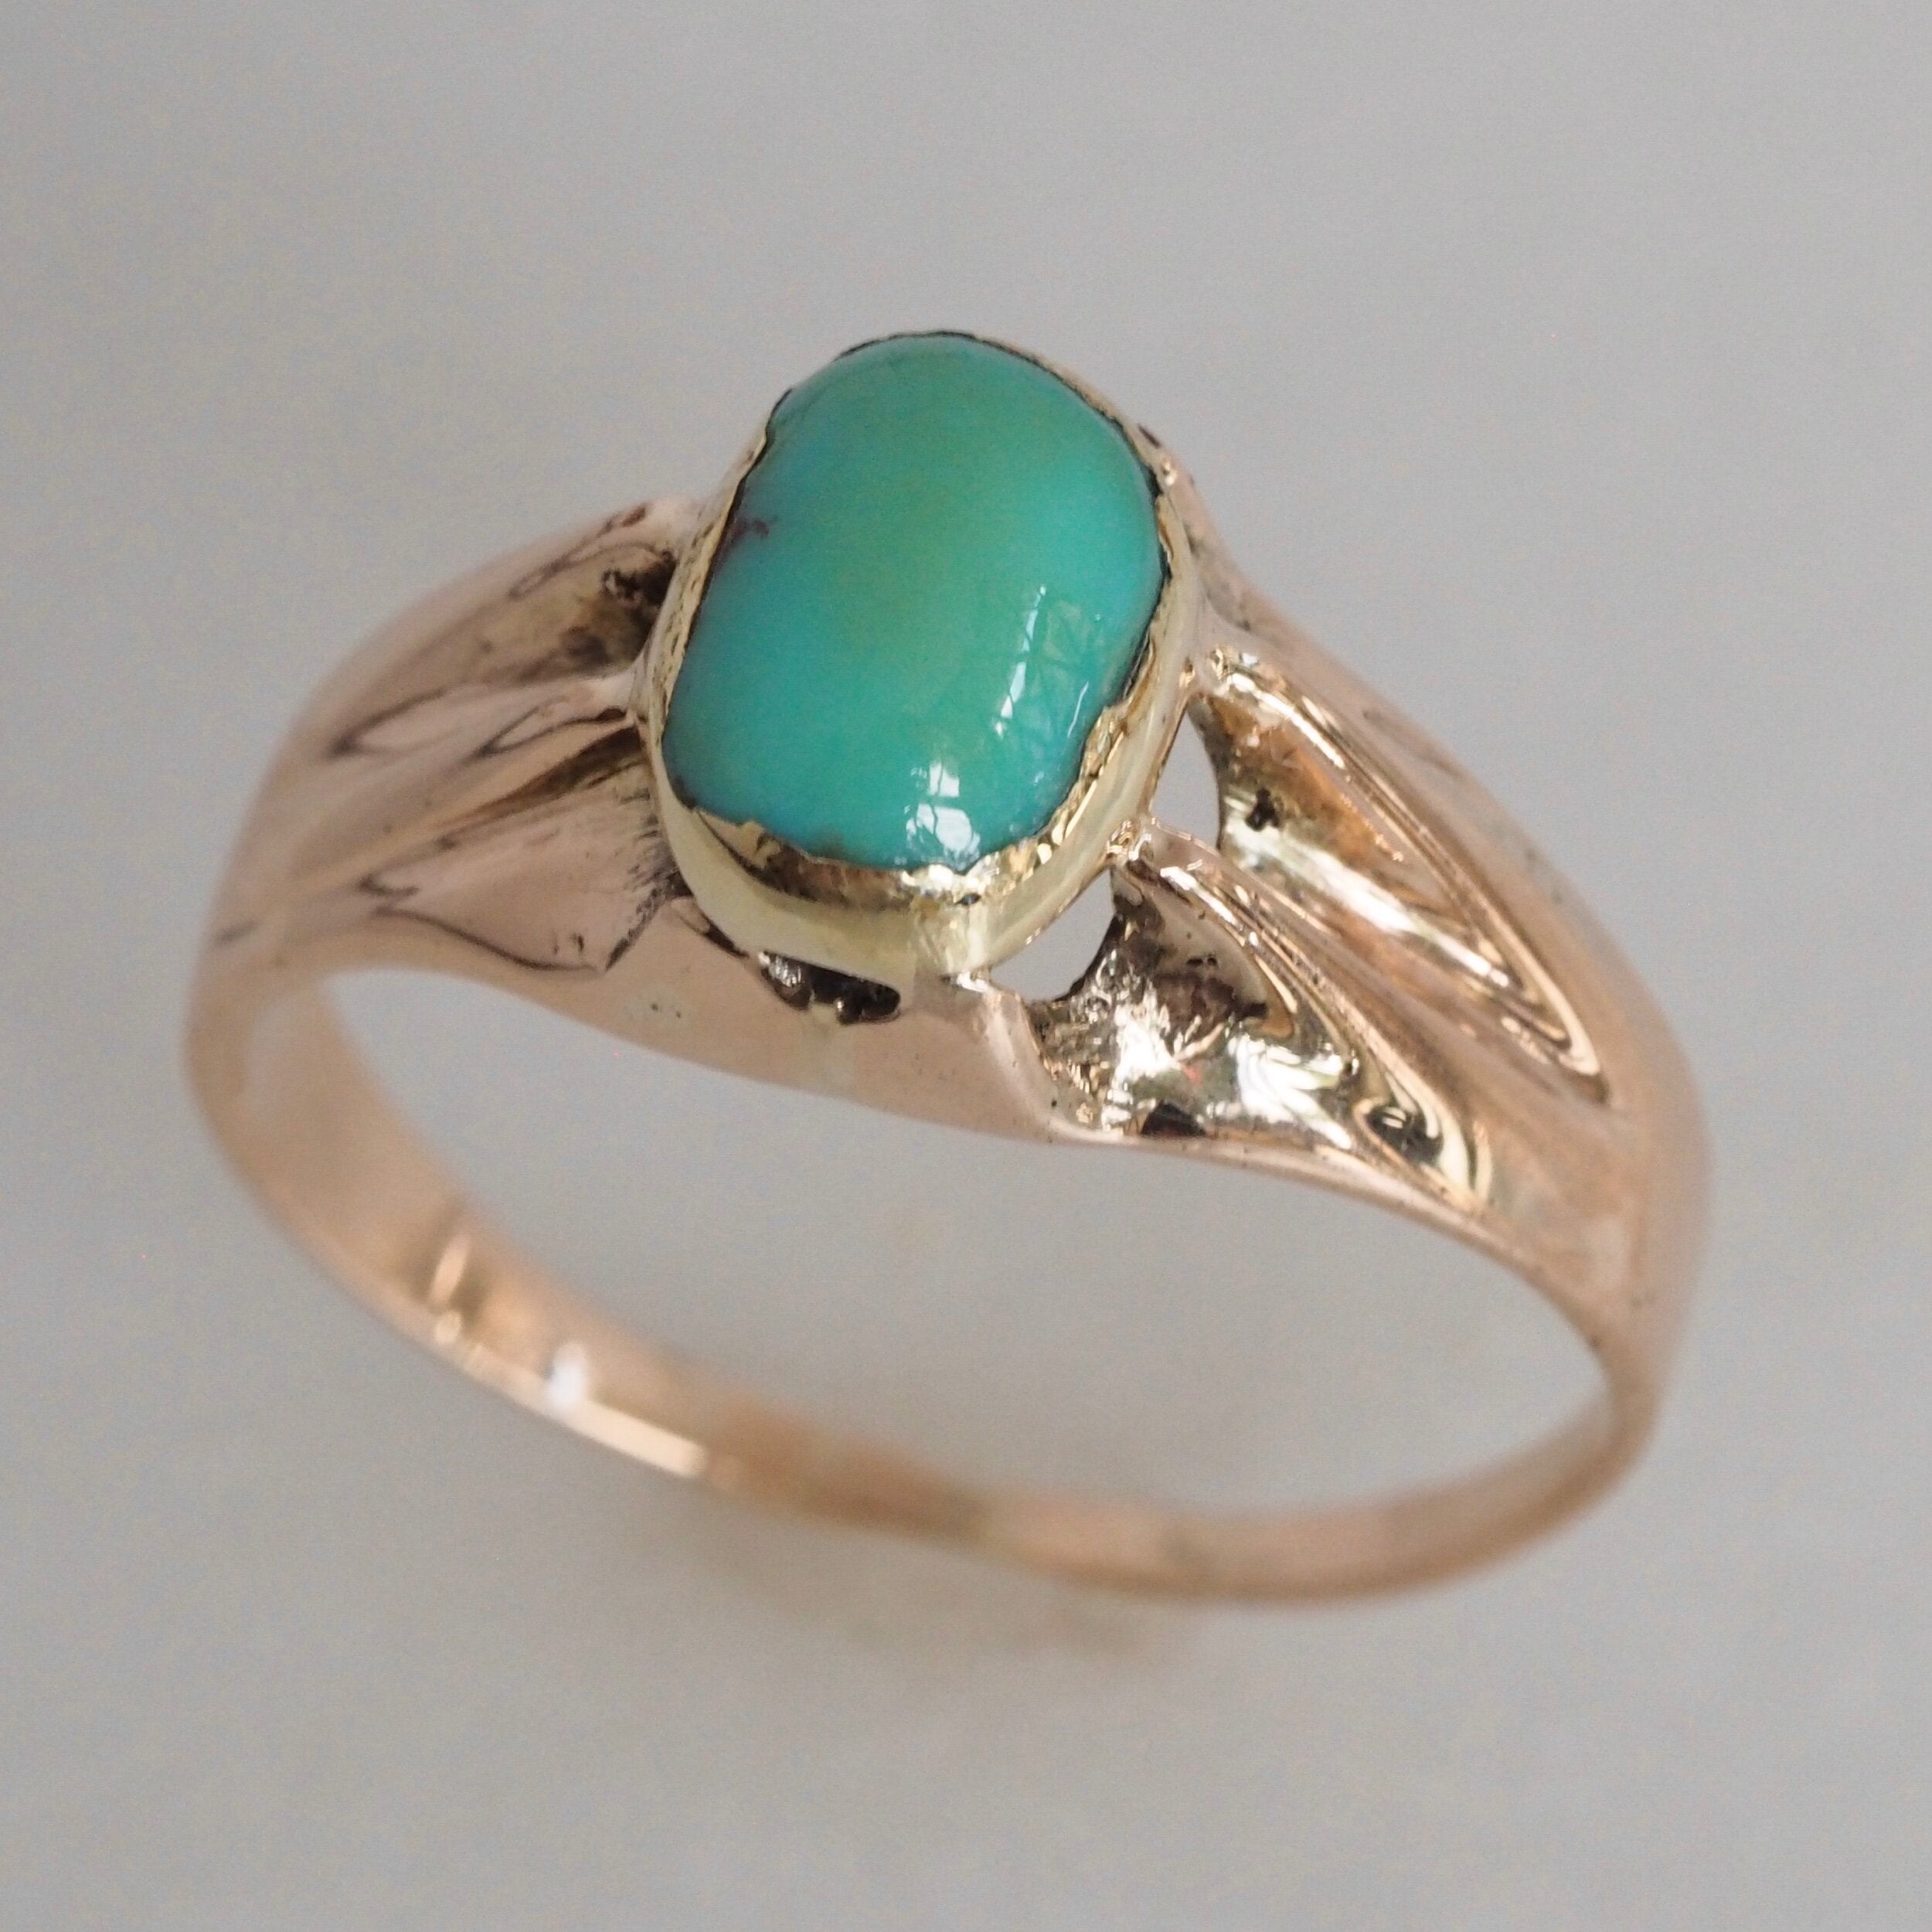 Antique Victorian 14k Gold Belcher Set Turquoise Ring